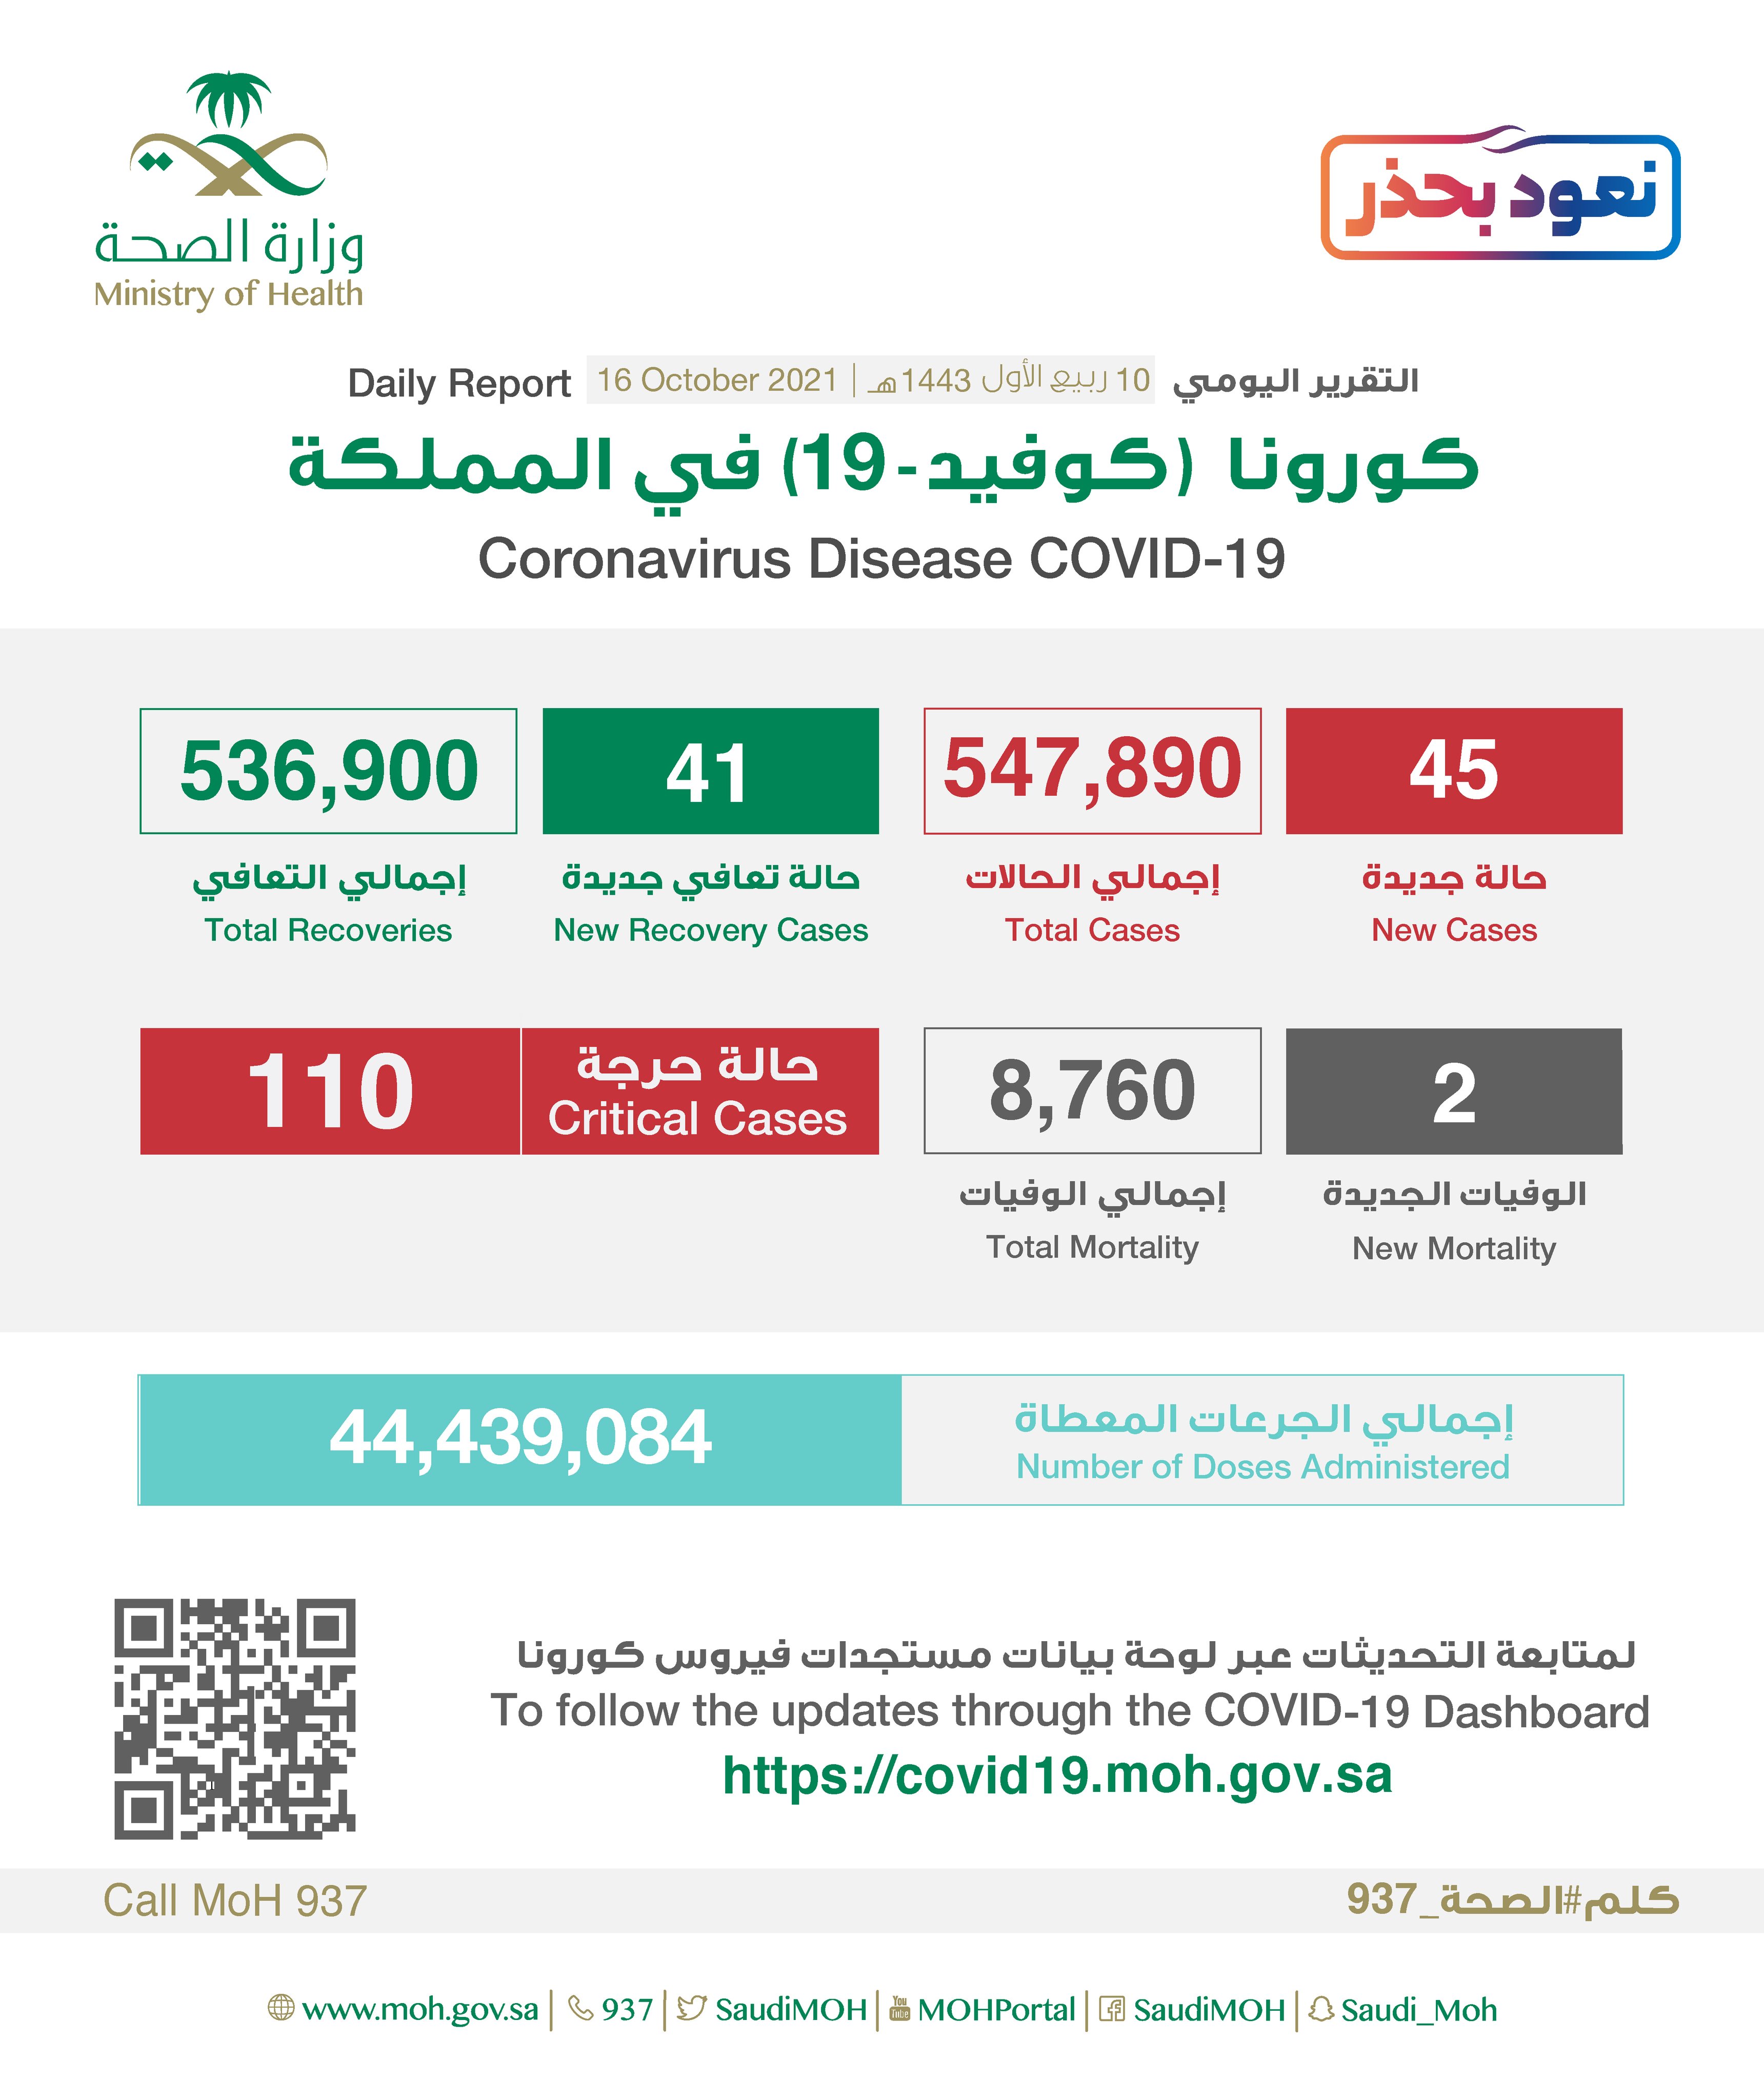 Saudi Arabia Coronavirus : Total Cases : 547,890, New Cases : 45, Cured : 536,900, Deaths: 8,760, Active Cases : 2,230